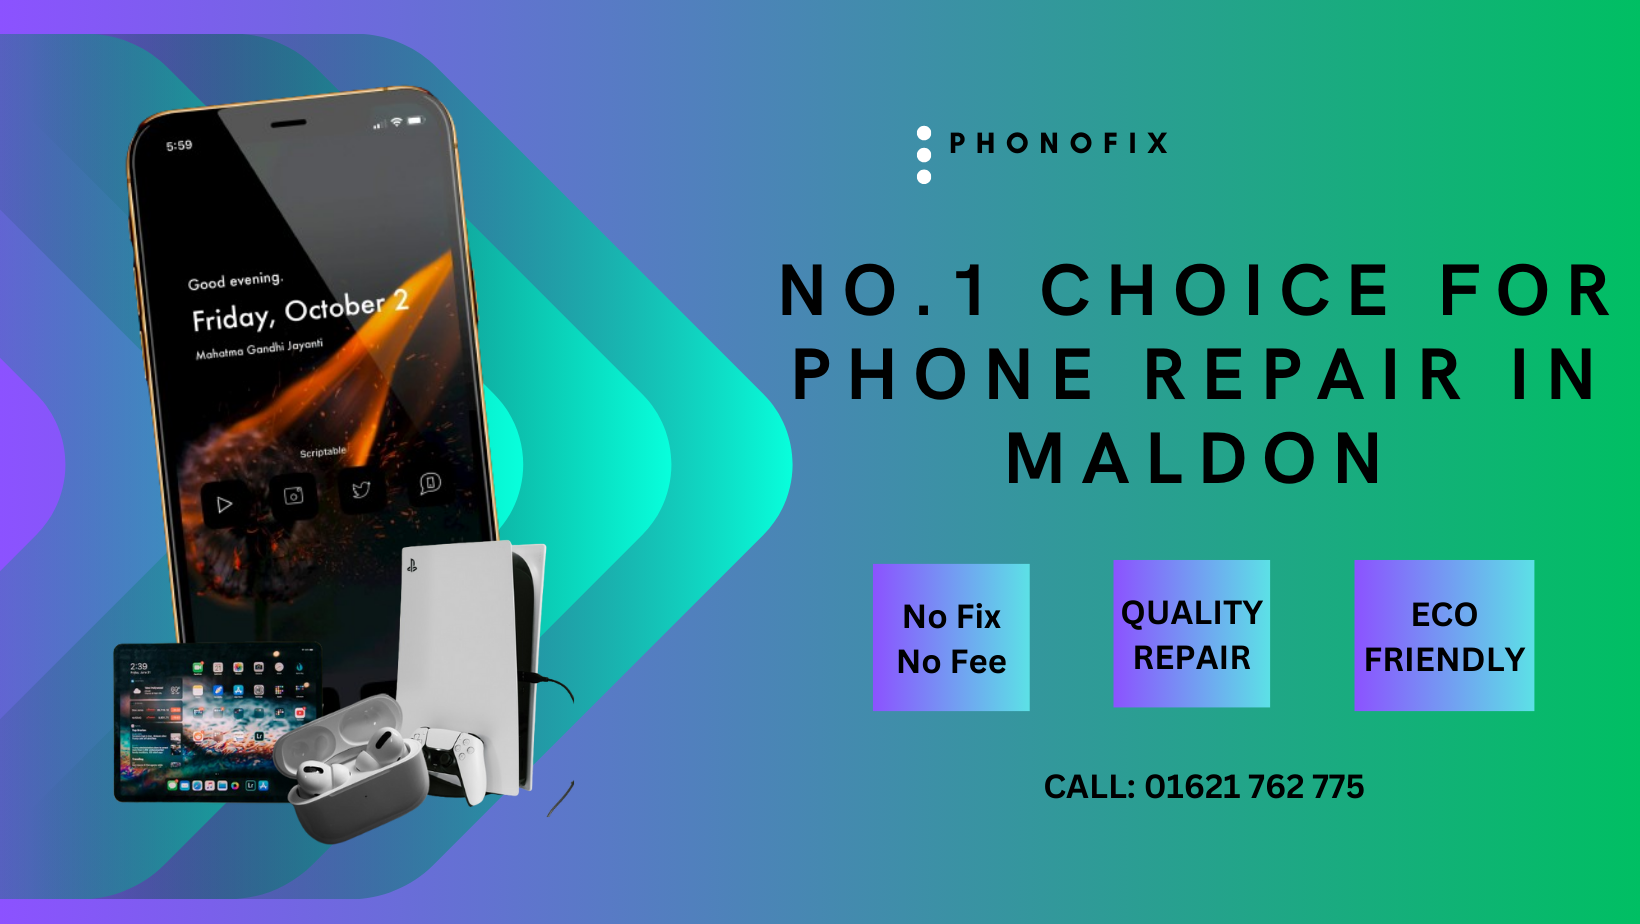 Phonofix™: No 1 Choice For Phone Repair In Maldon